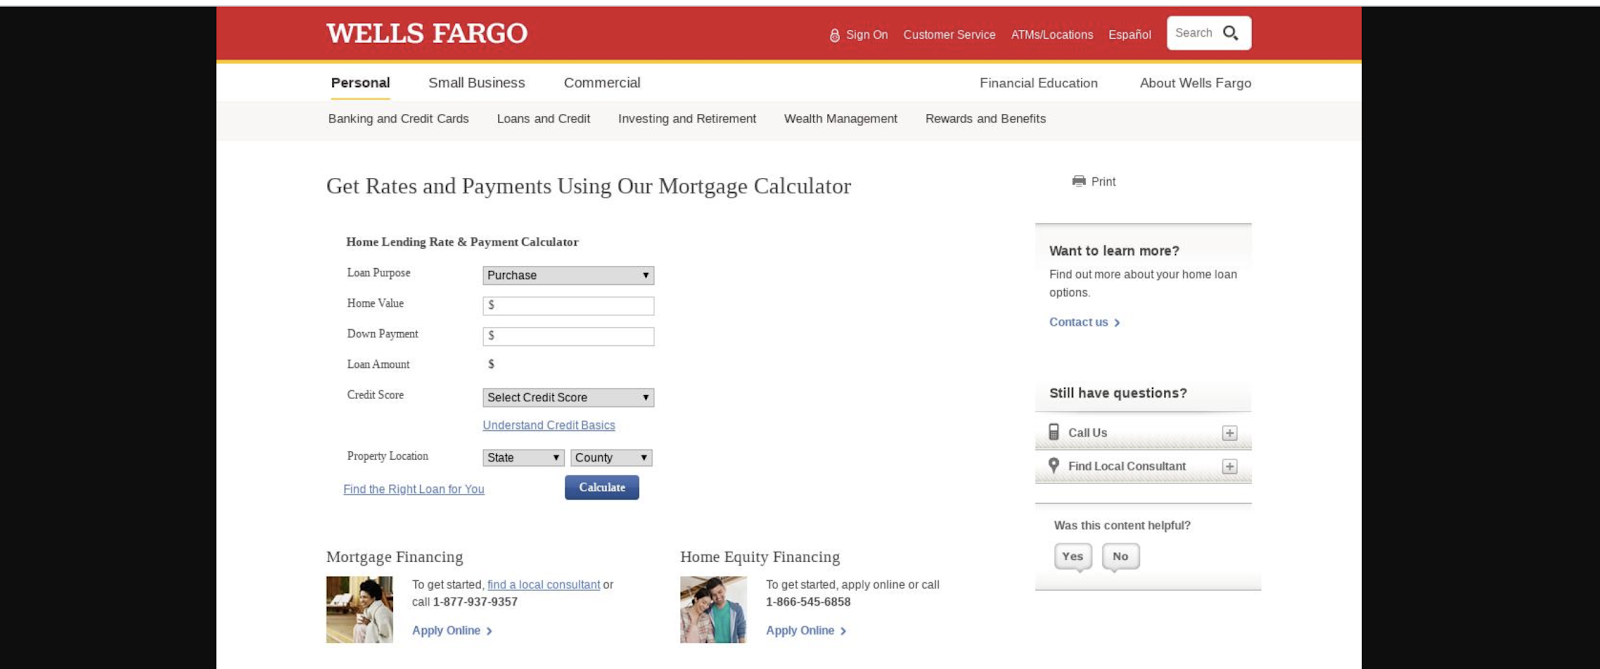 Wells Fargo landing page with a useful calculator widget.